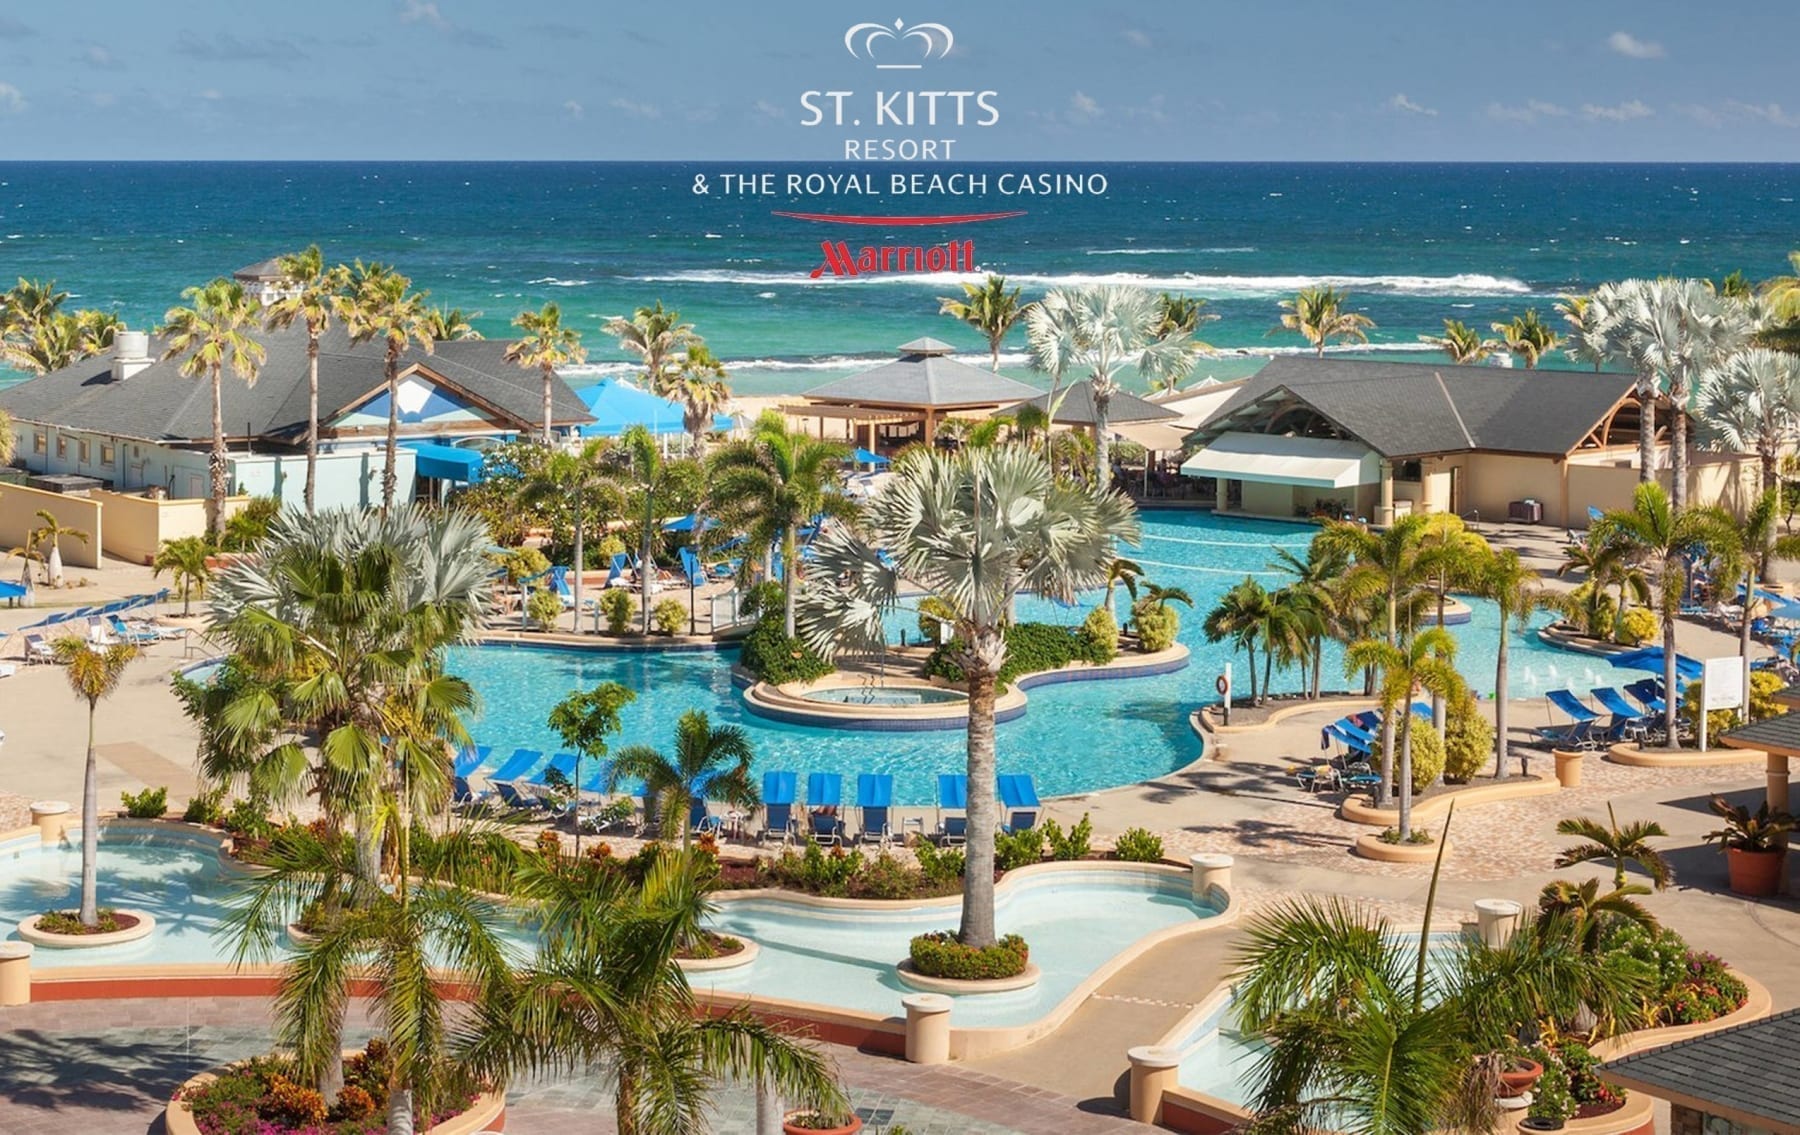 St Kitts & Royal Beach Casino Resort Marriott by MWT Hotel & Resort Architect